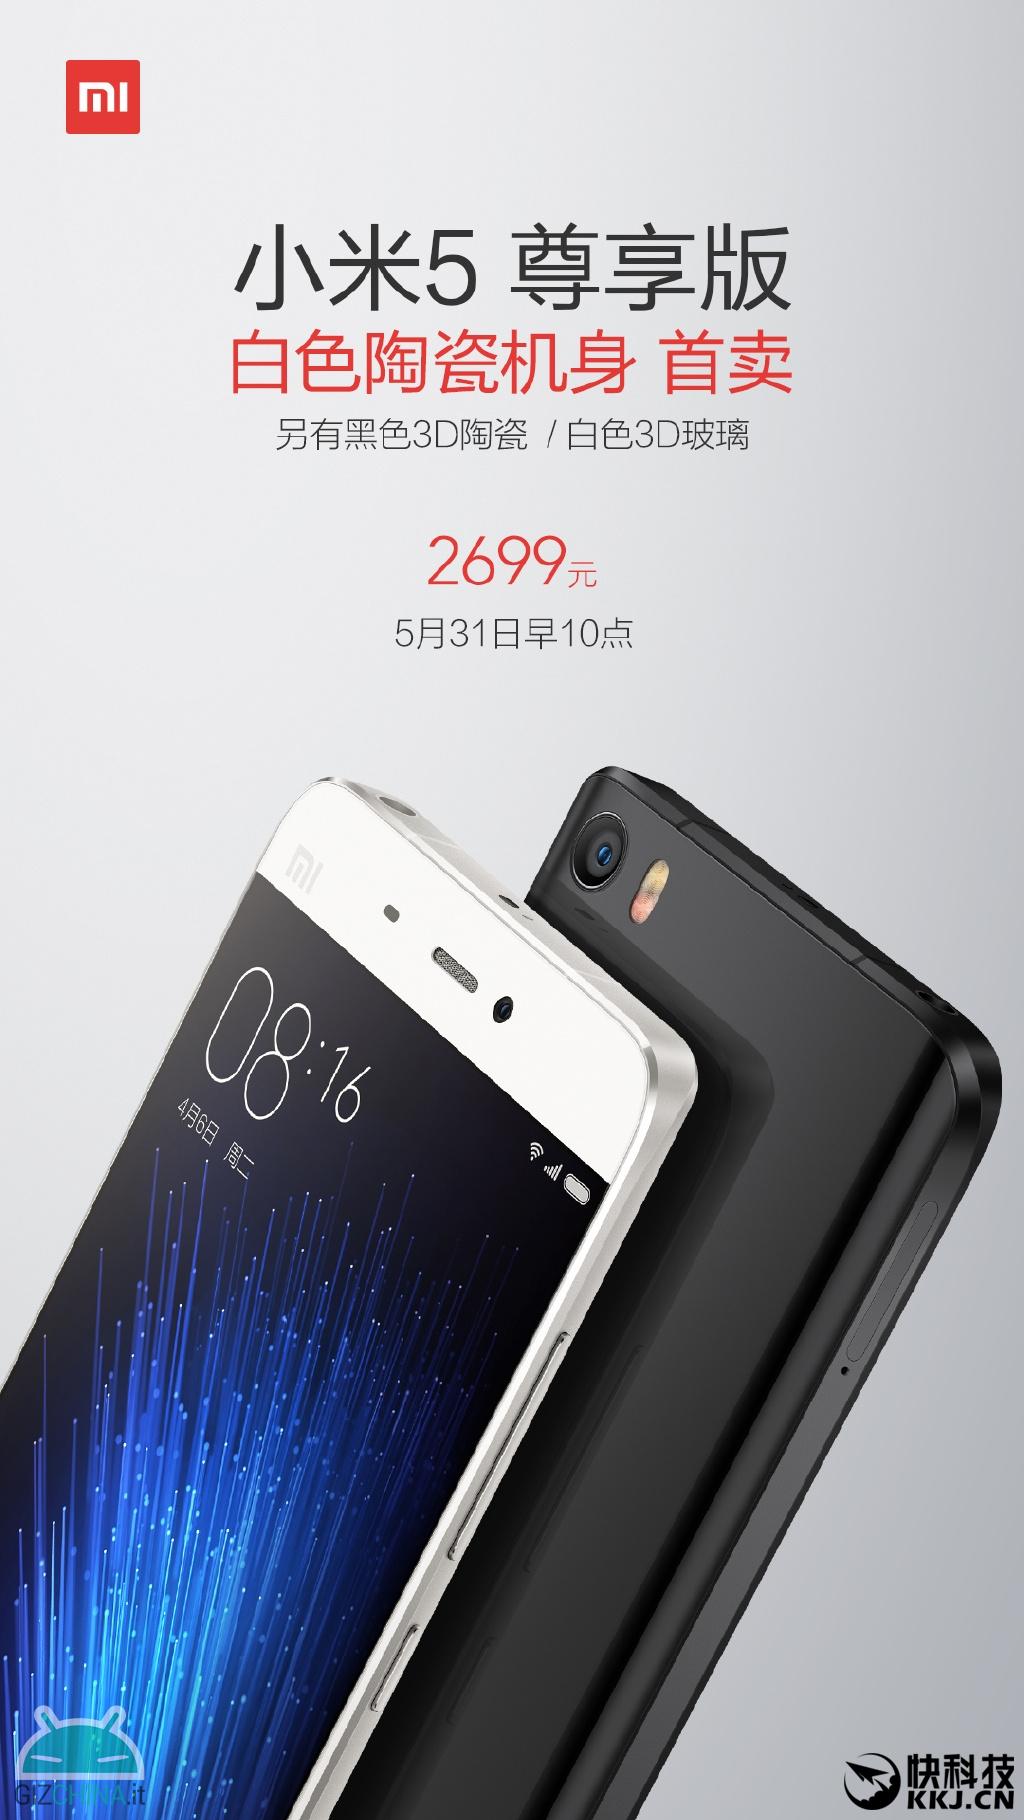 Xiaomi Mi 5 Ceramic White Exclusive Edition